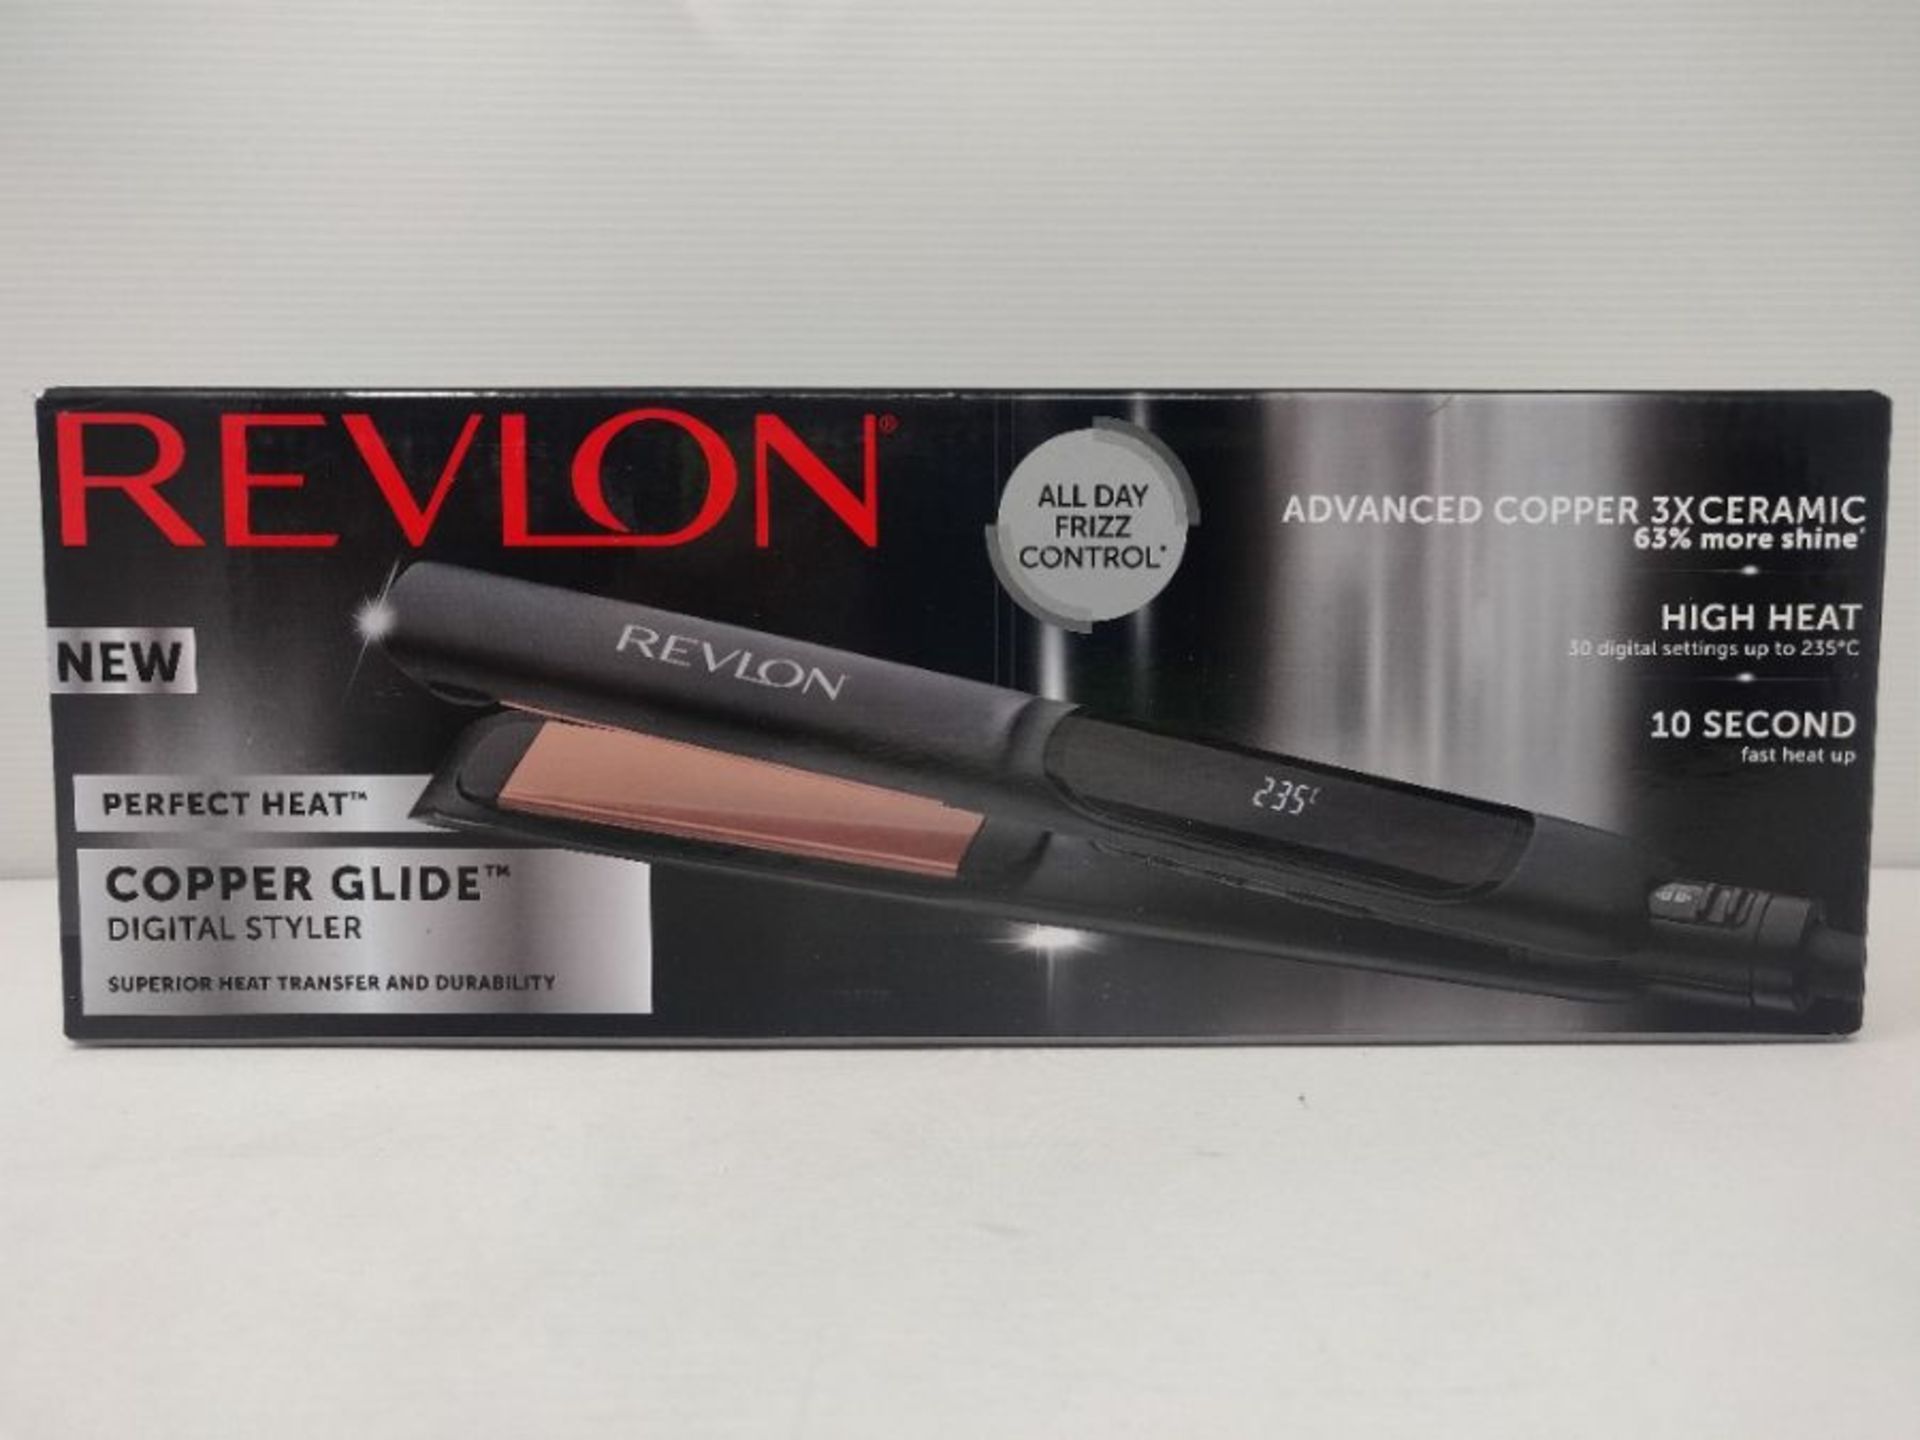 Revlon Perfect Heat Copper Glide Digital Styler - Image 2 of 2